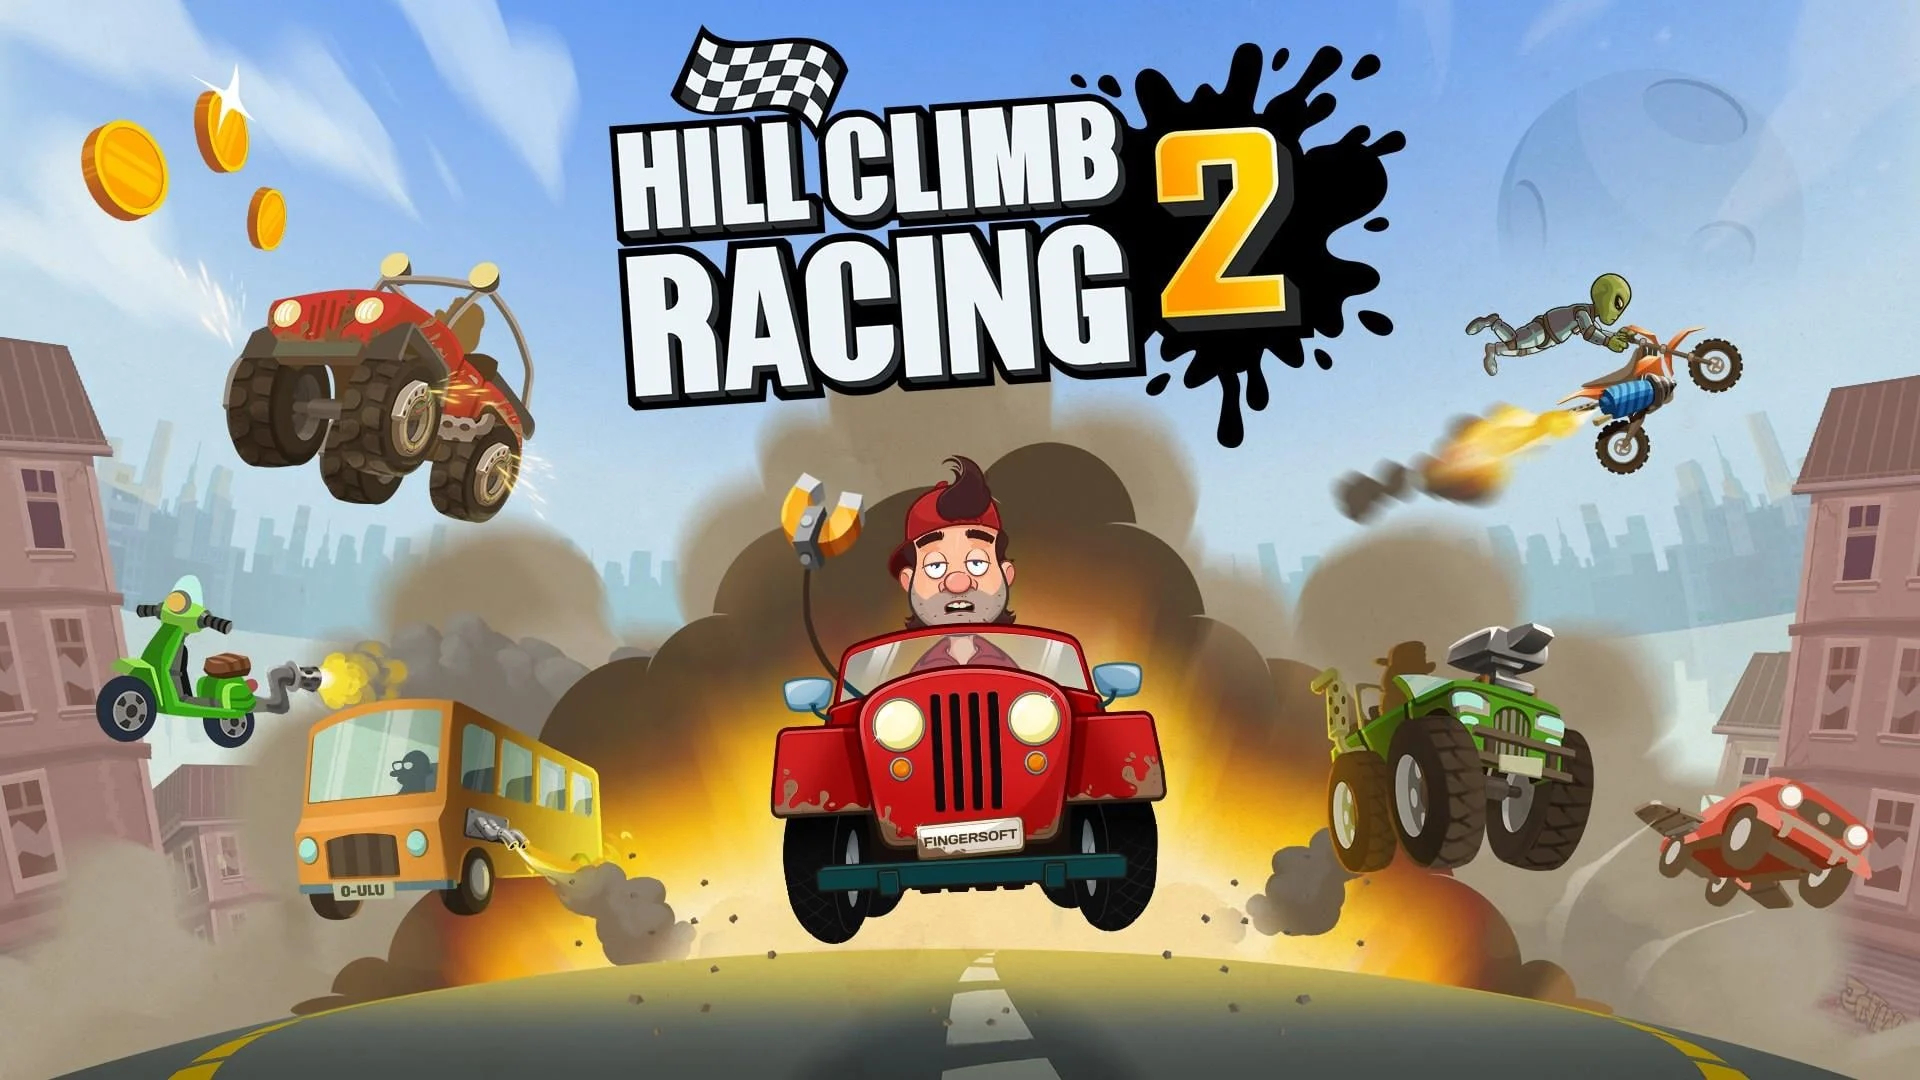 Hill Climb Racing